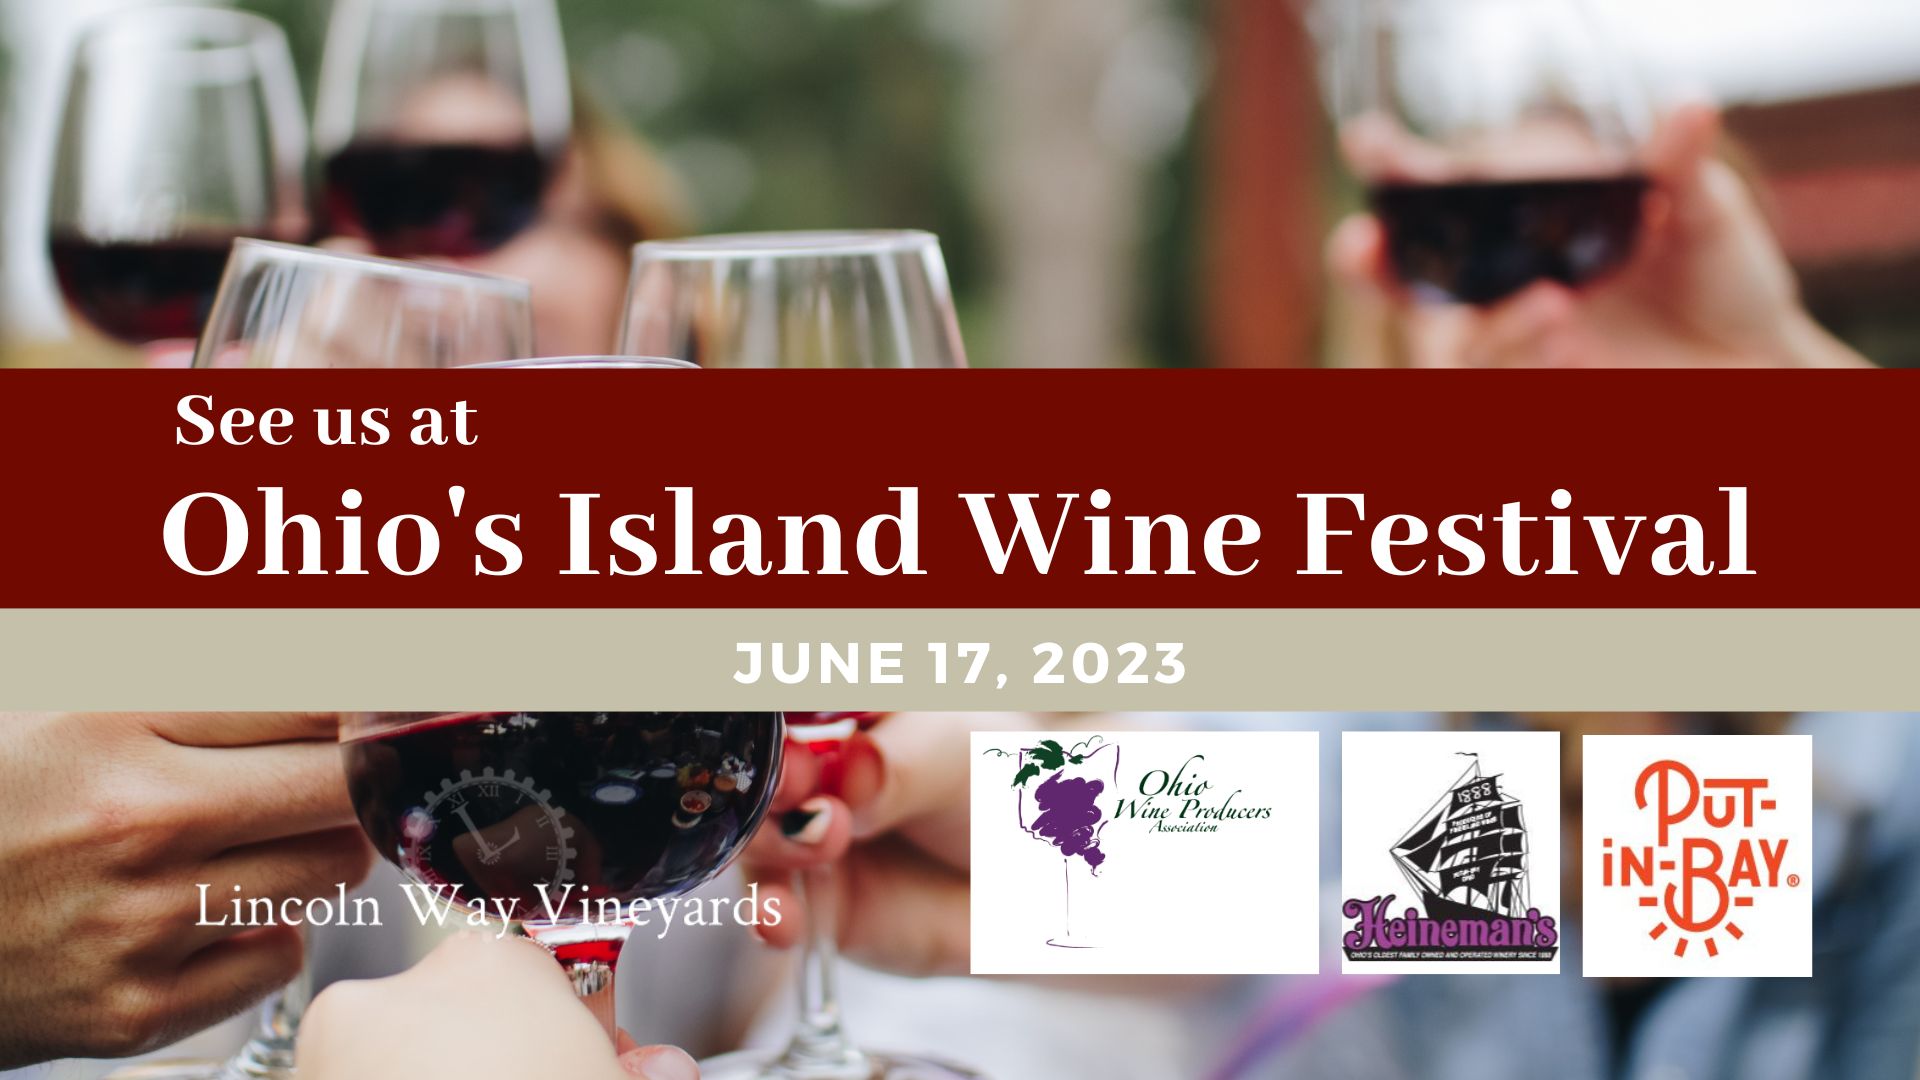 Ohio's Island Wine Festival